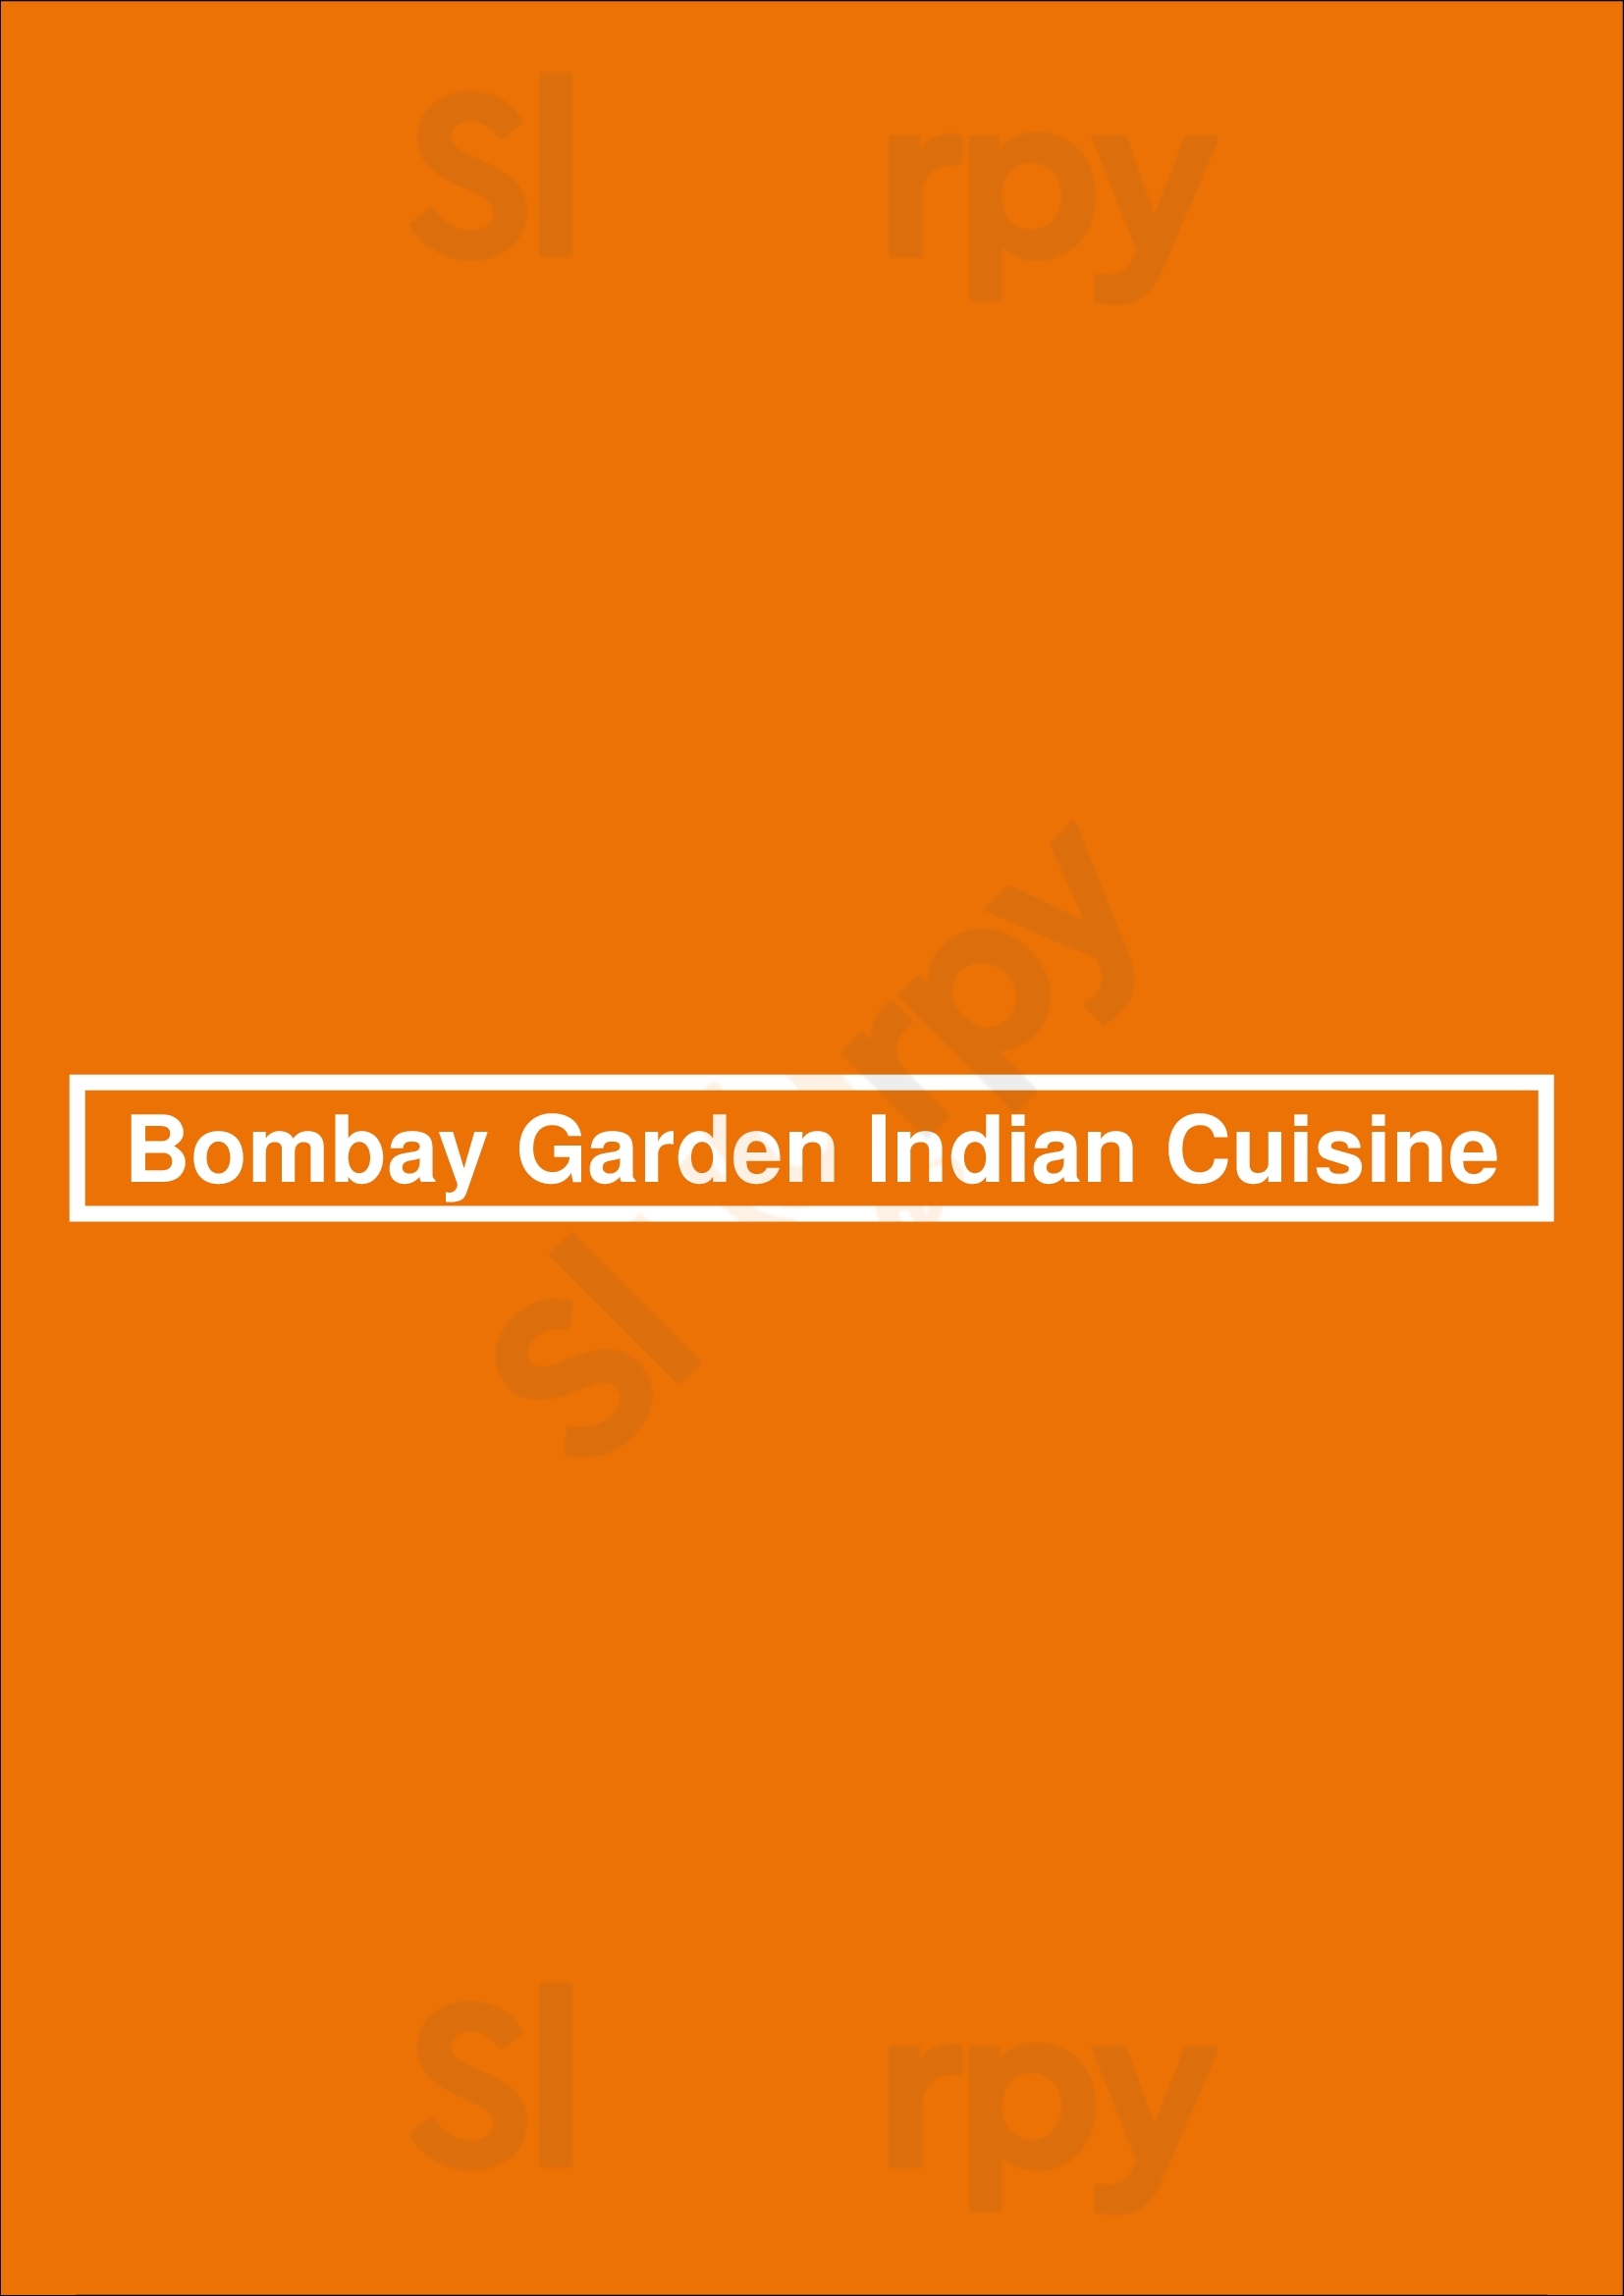 Bombay Garden Indian Cuisine Ottawa Menu - 1